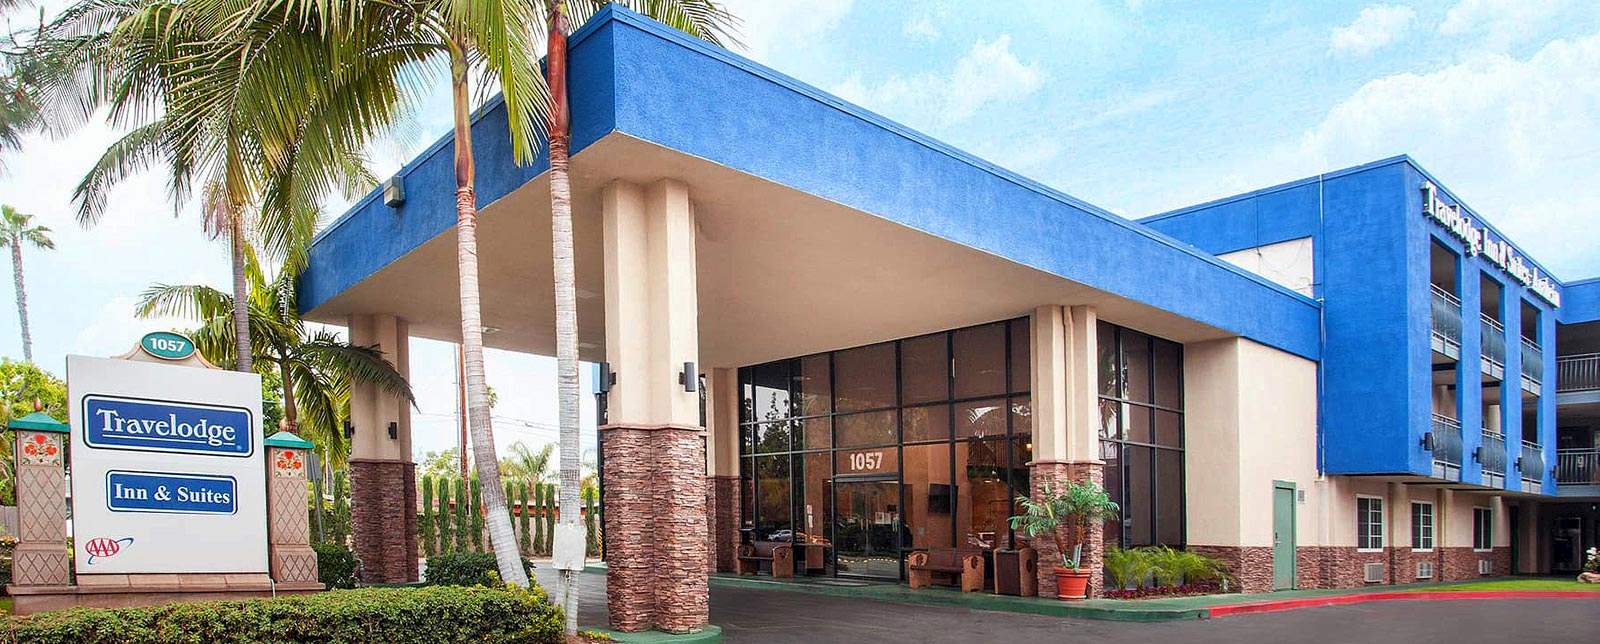 Travelodge Anaheim Inn & Suites California
 